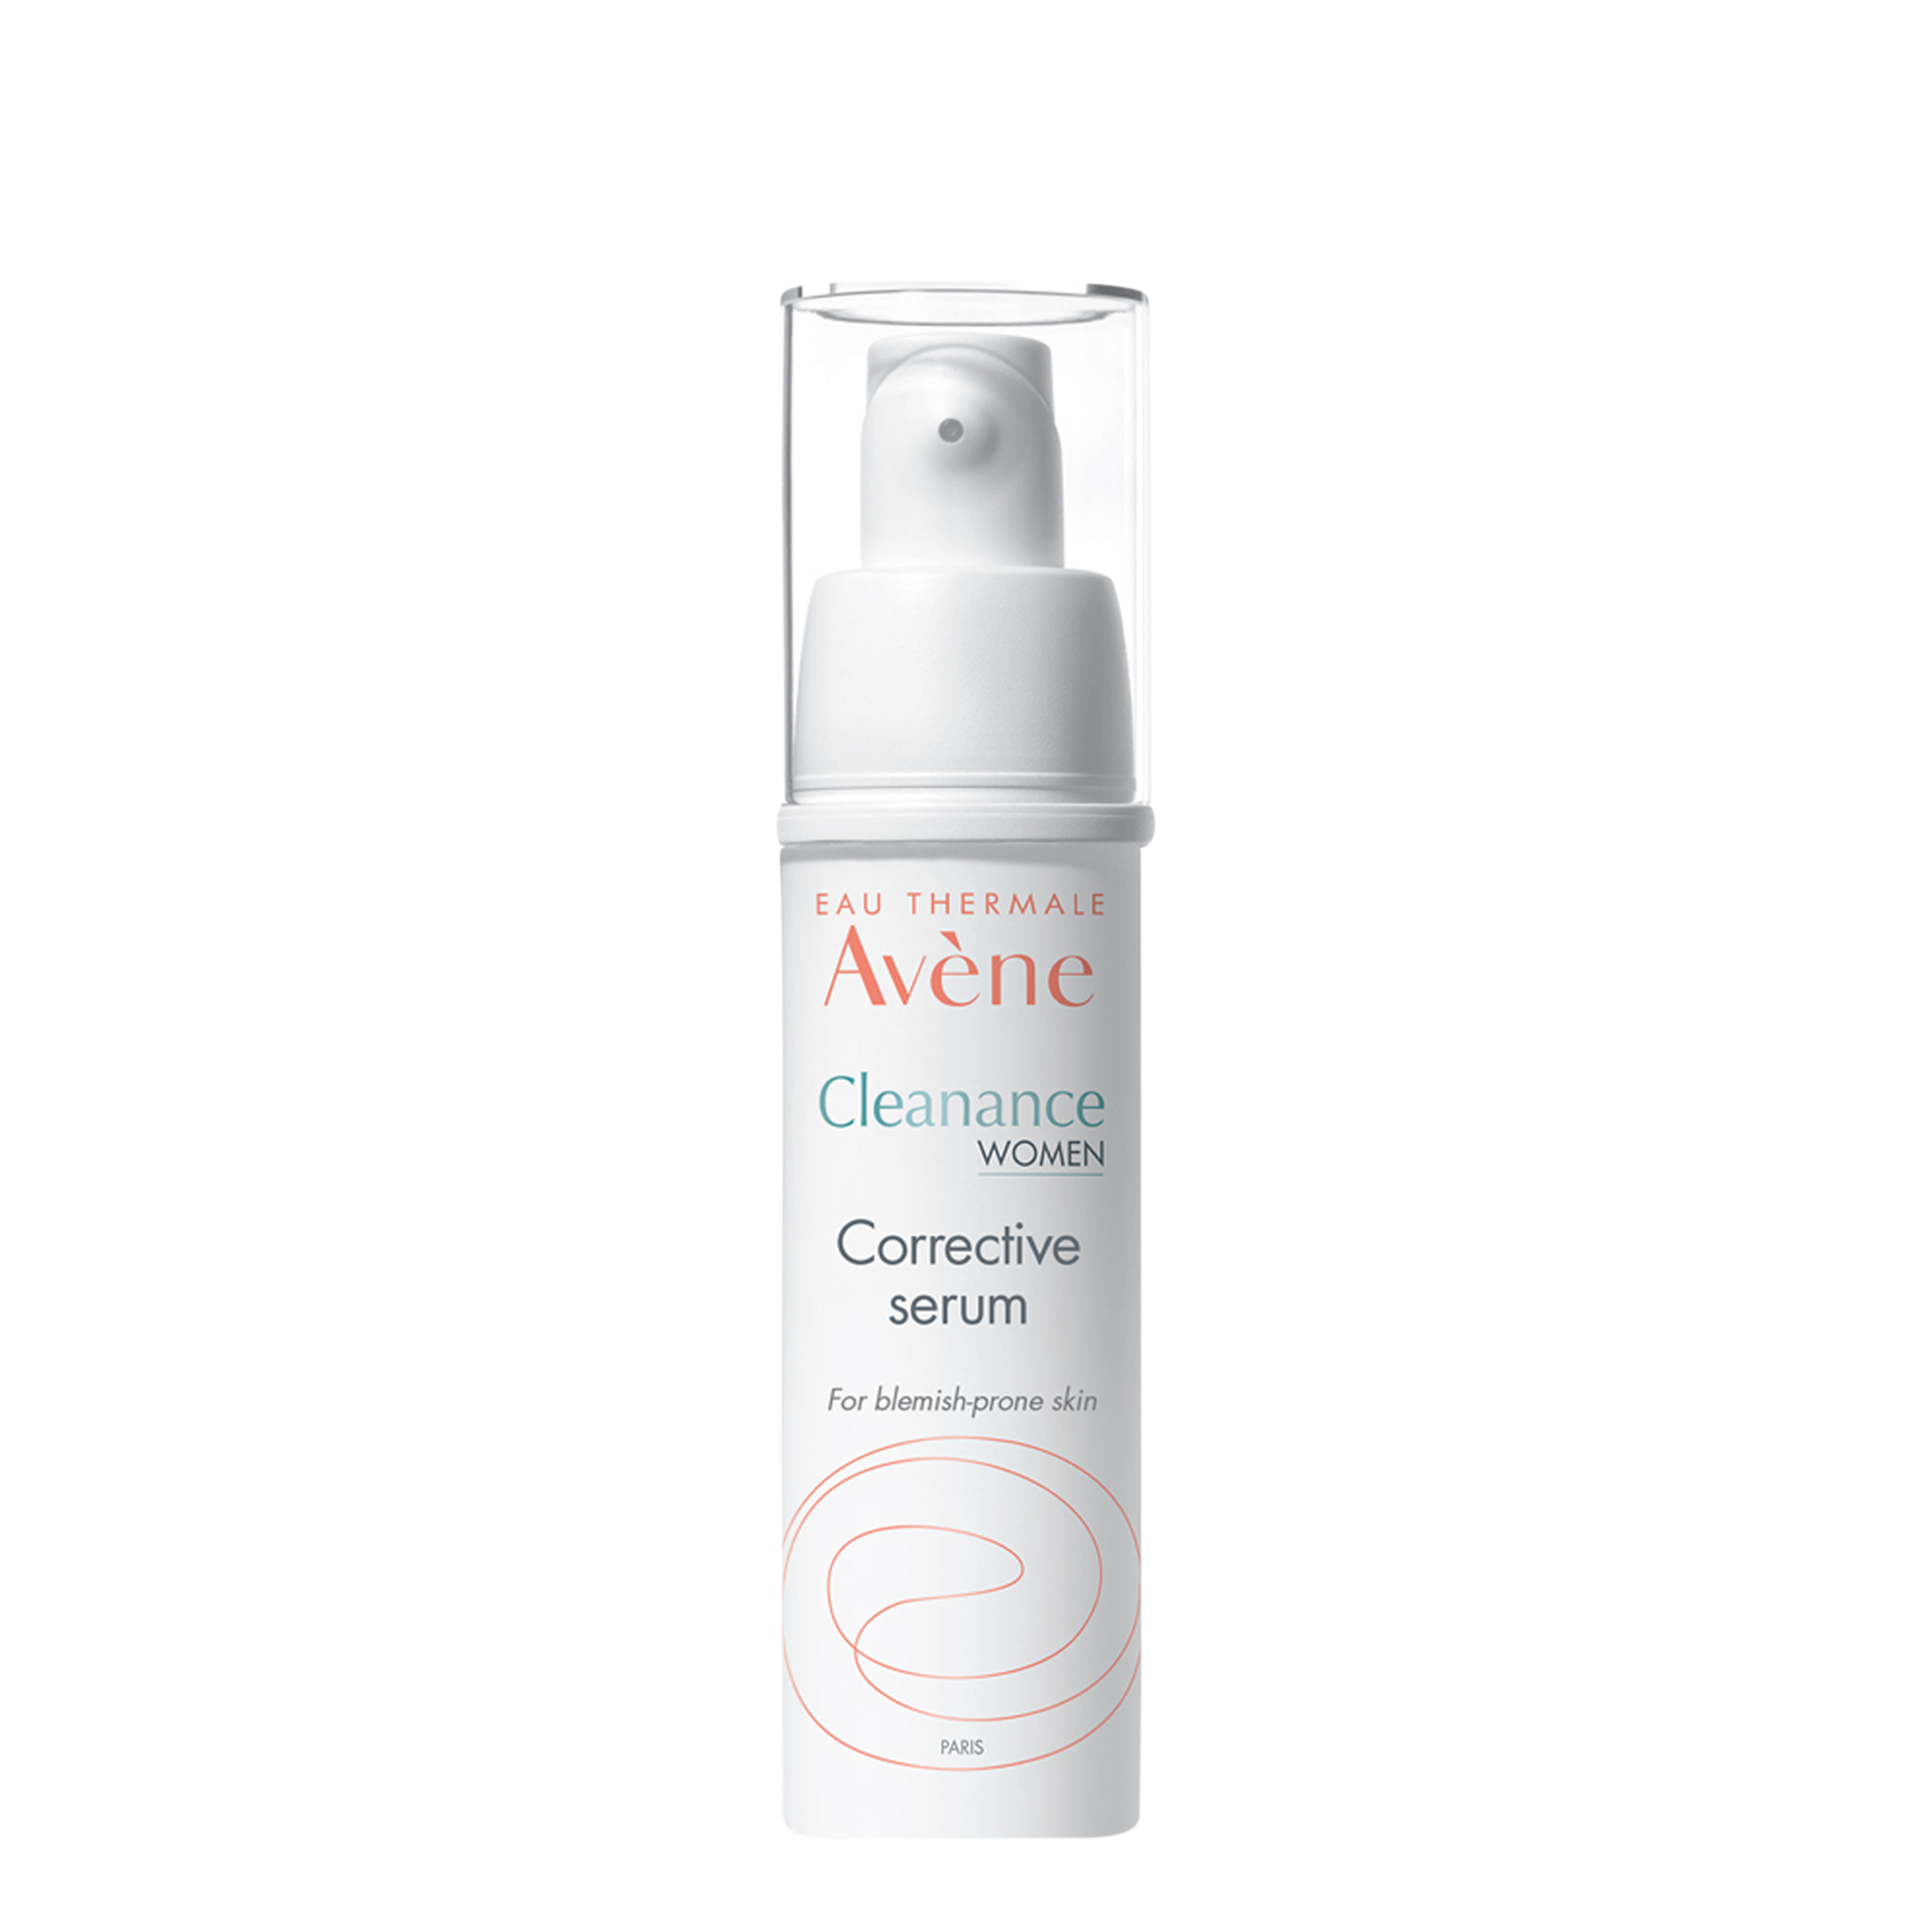 Avène Cleanance WOMEN Corrective Serum 30ml - Serum for Hormonal Acne